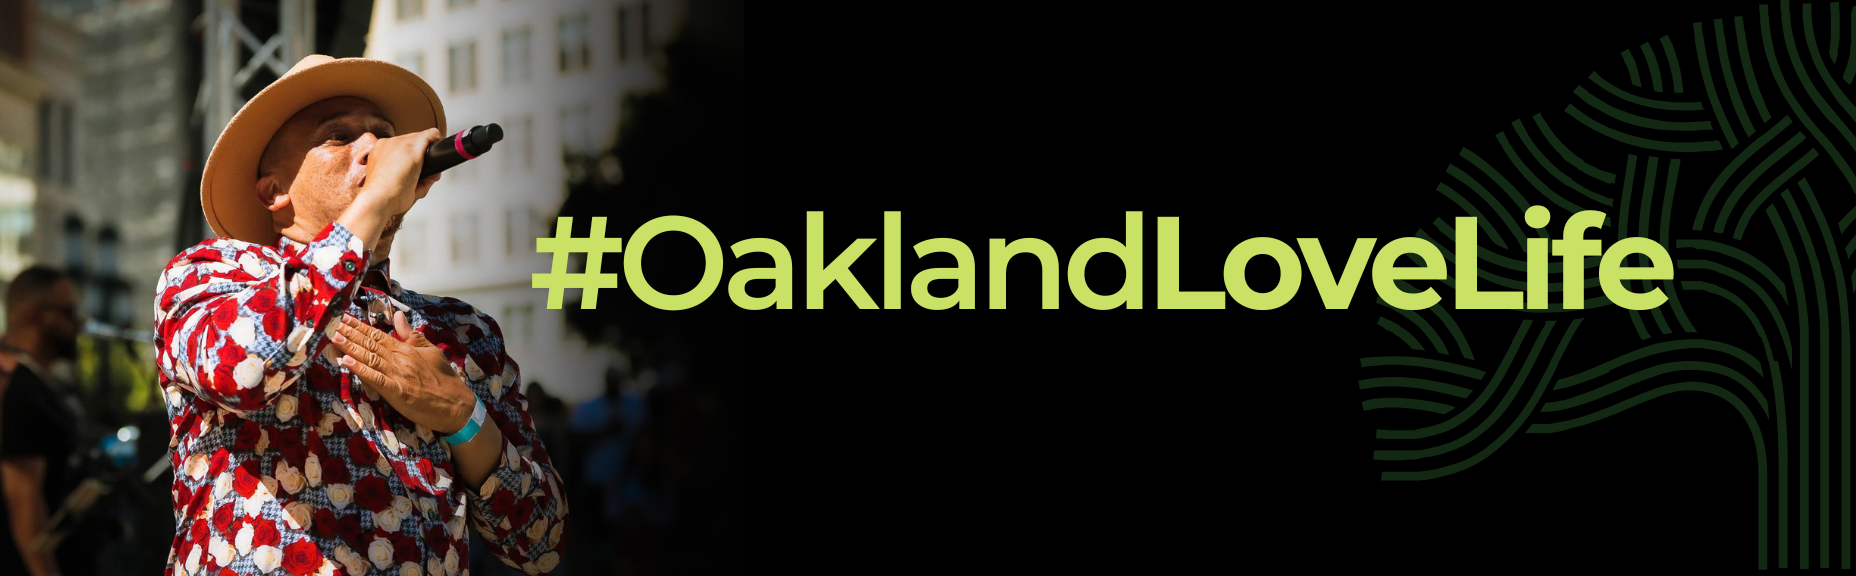 Oakland Love Life